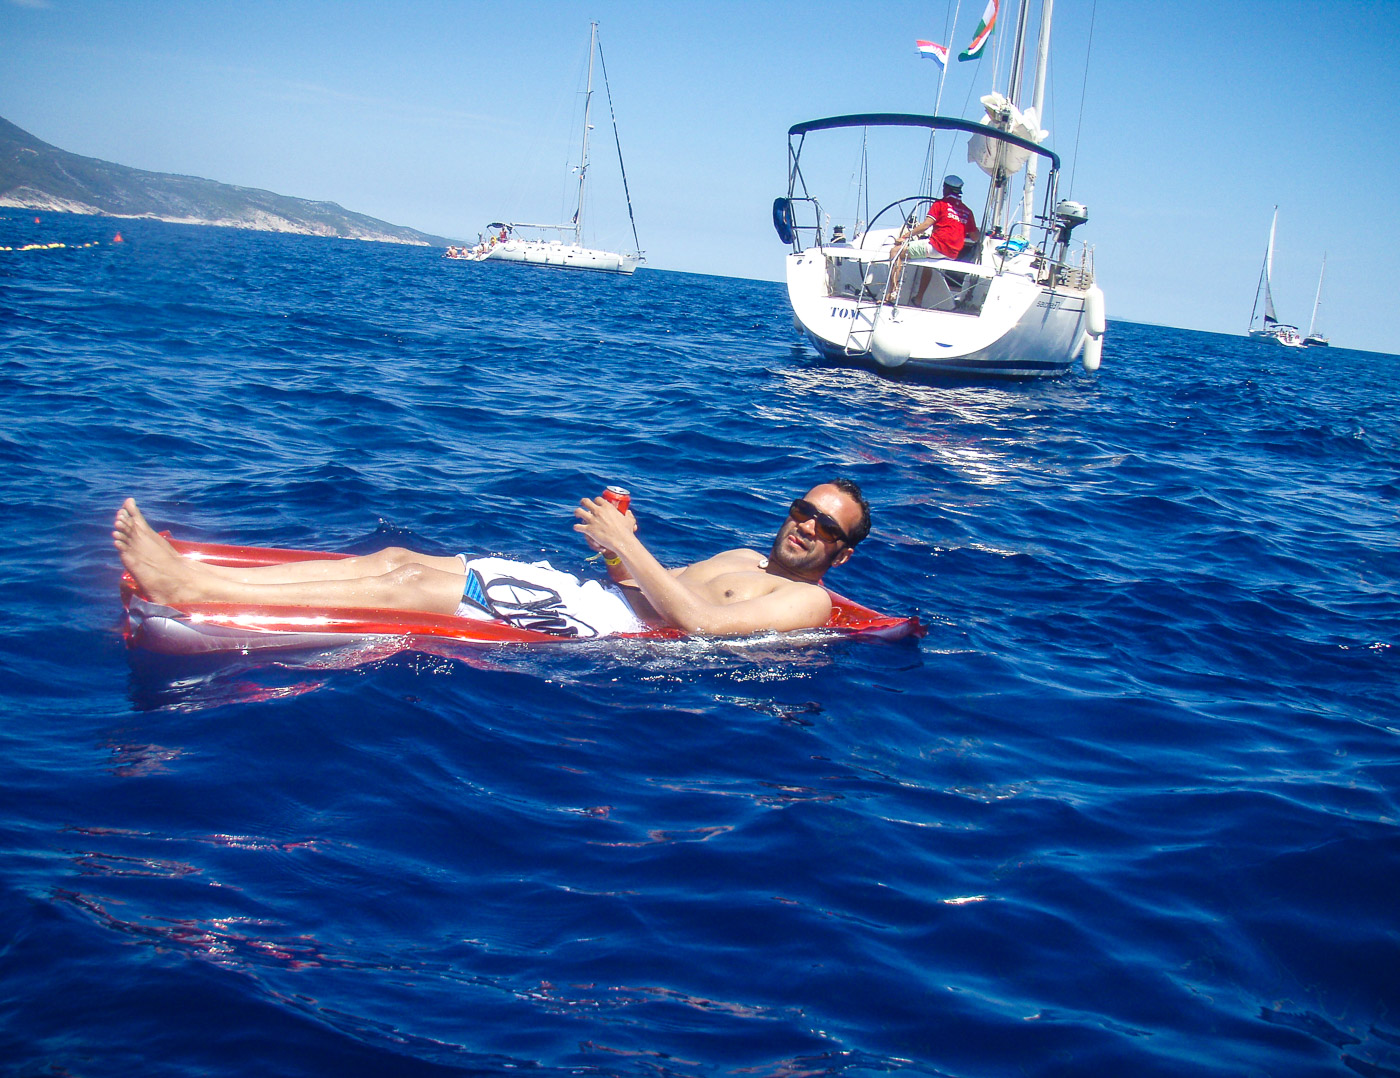 The_Yacht_Week_Sailing_Boat_Croatia_Europe_Summer_Trip_Party_Luxury_Lifestyle_SassyPilgrim_Travel_Blog_Indian_Blogger_Solo_Traveler_Female_Hvar_Split__Kastella_Skedro_Soltar_Viz_Zadar_Dubronvik